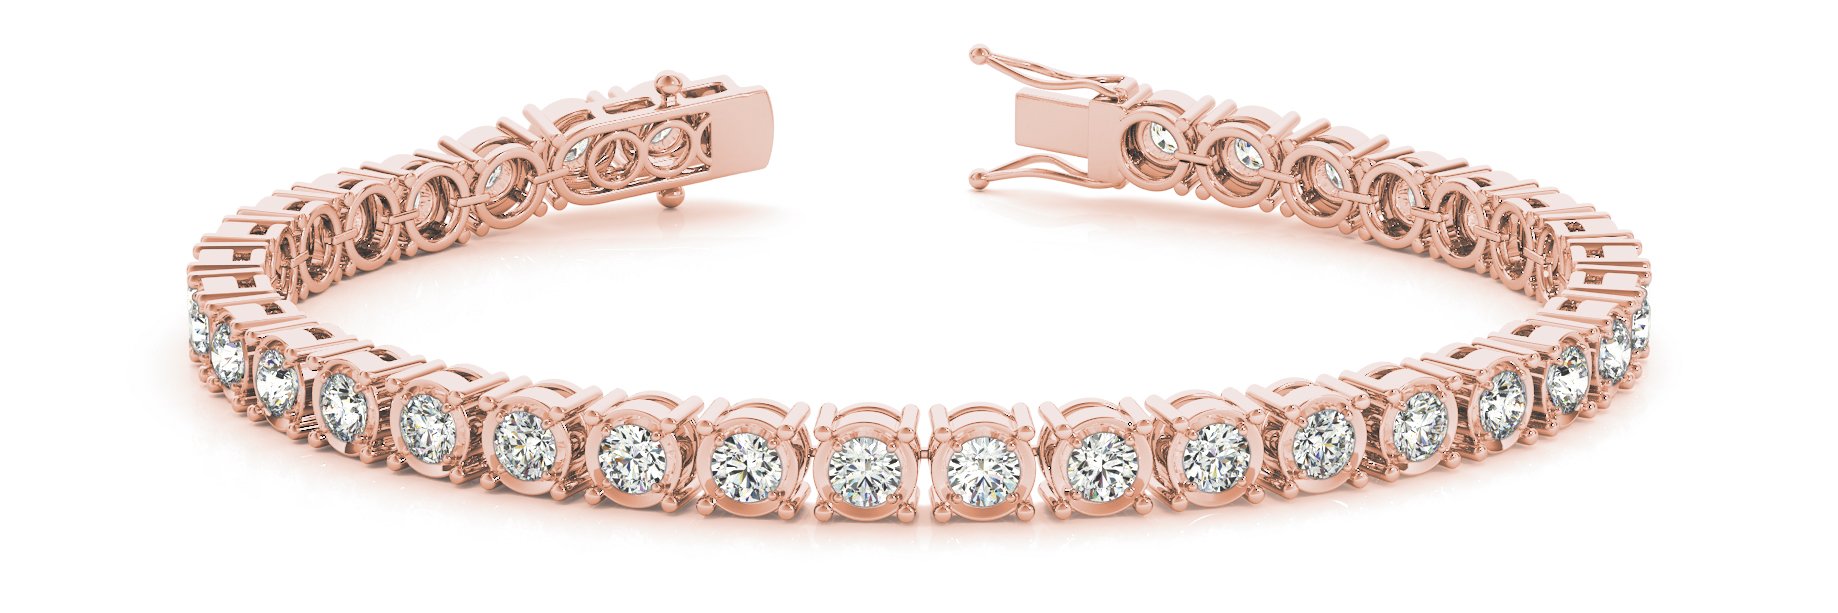 Fancy Diamond Bracelet Ladies 1.10ct tw - 14kt Rose Gold